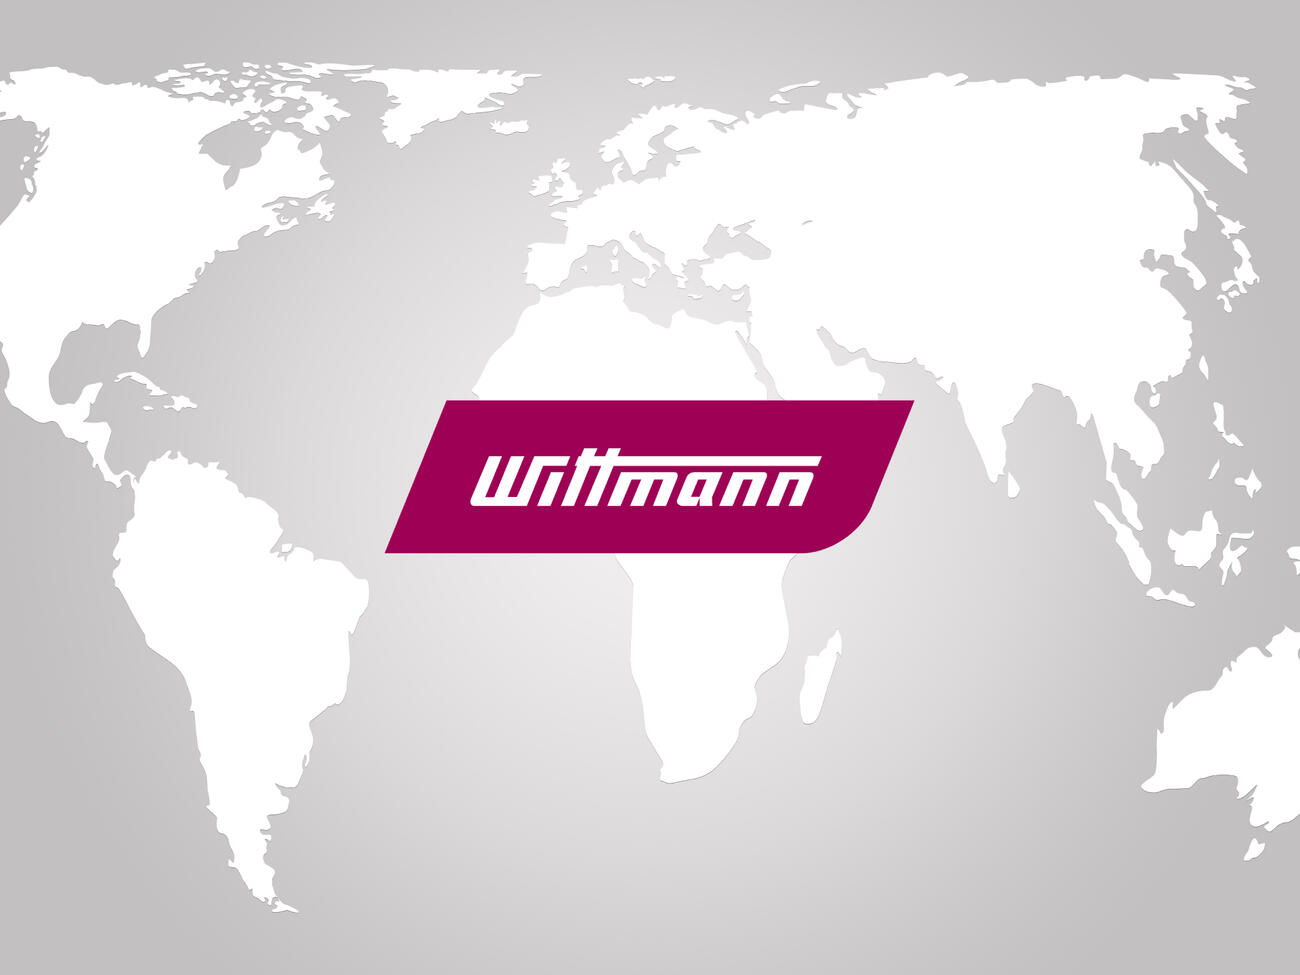 WITTMANN Group – world of innovation